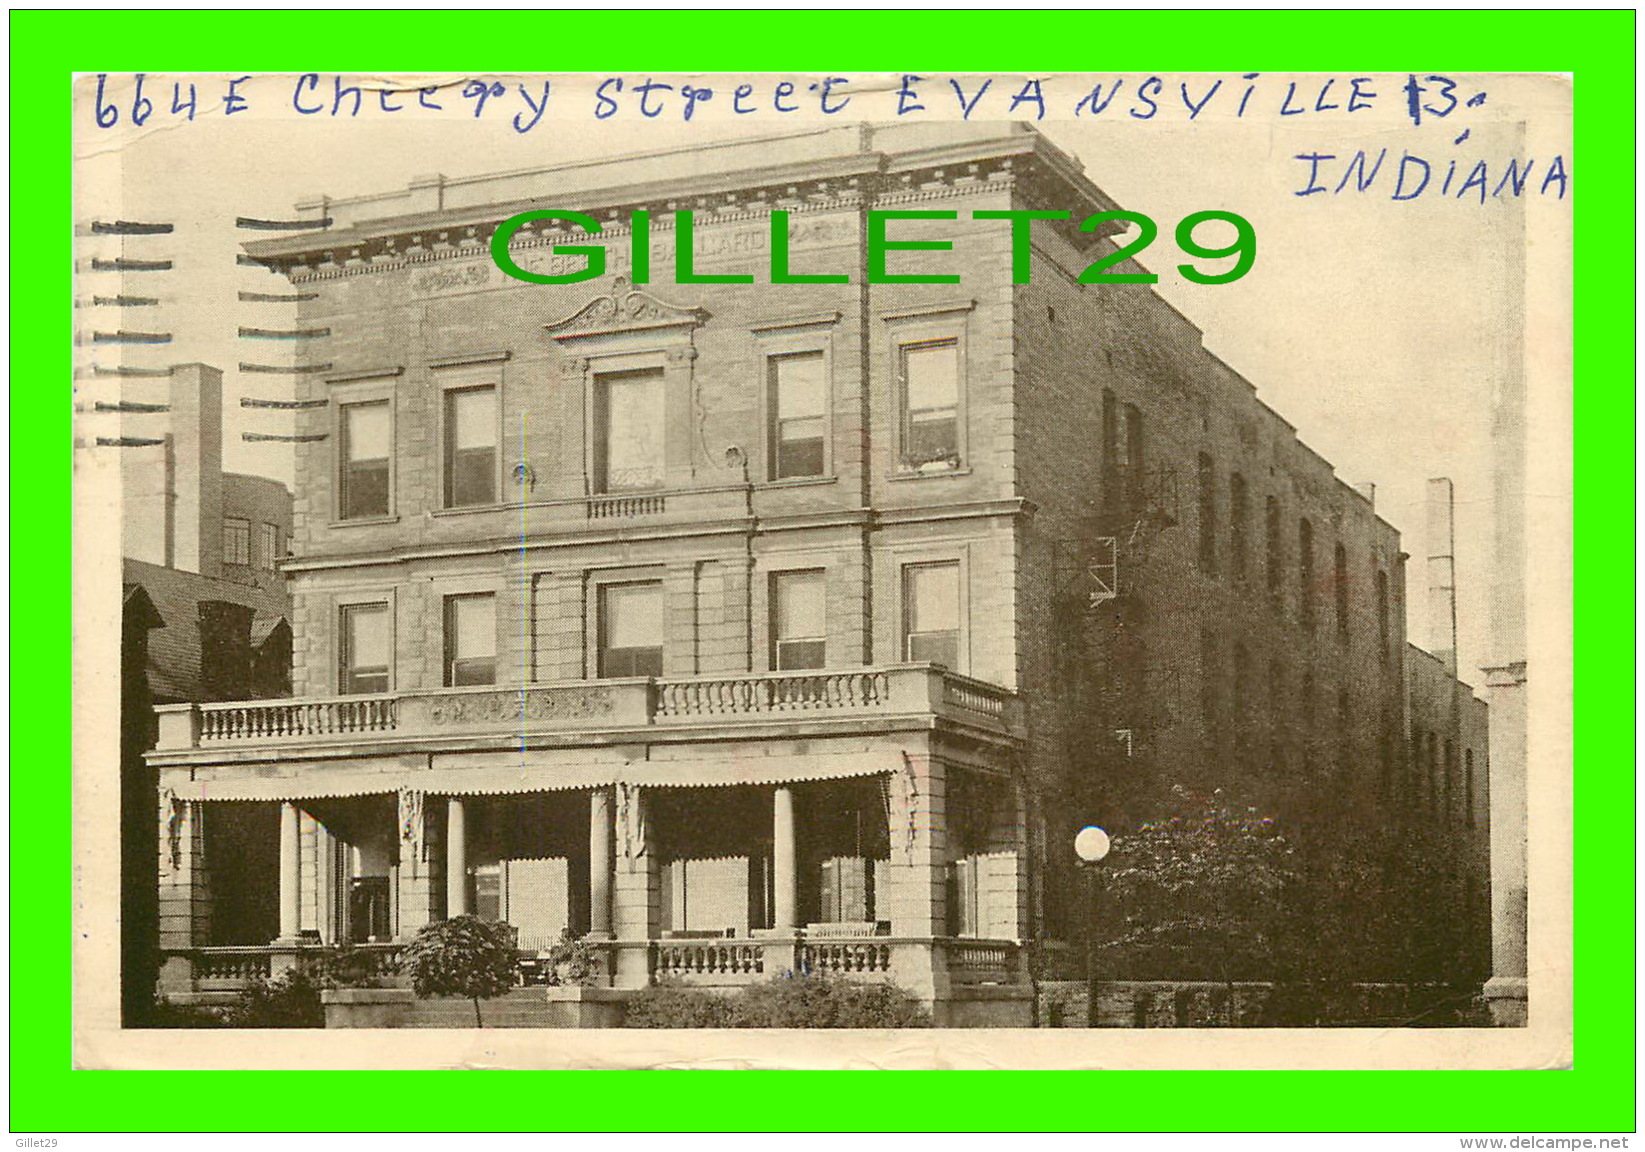 EVANSVILLE, IN - MISS MORRIS HOUSE'S , CHEERY STREET - TRAVEL IN 1958 - - Evansville